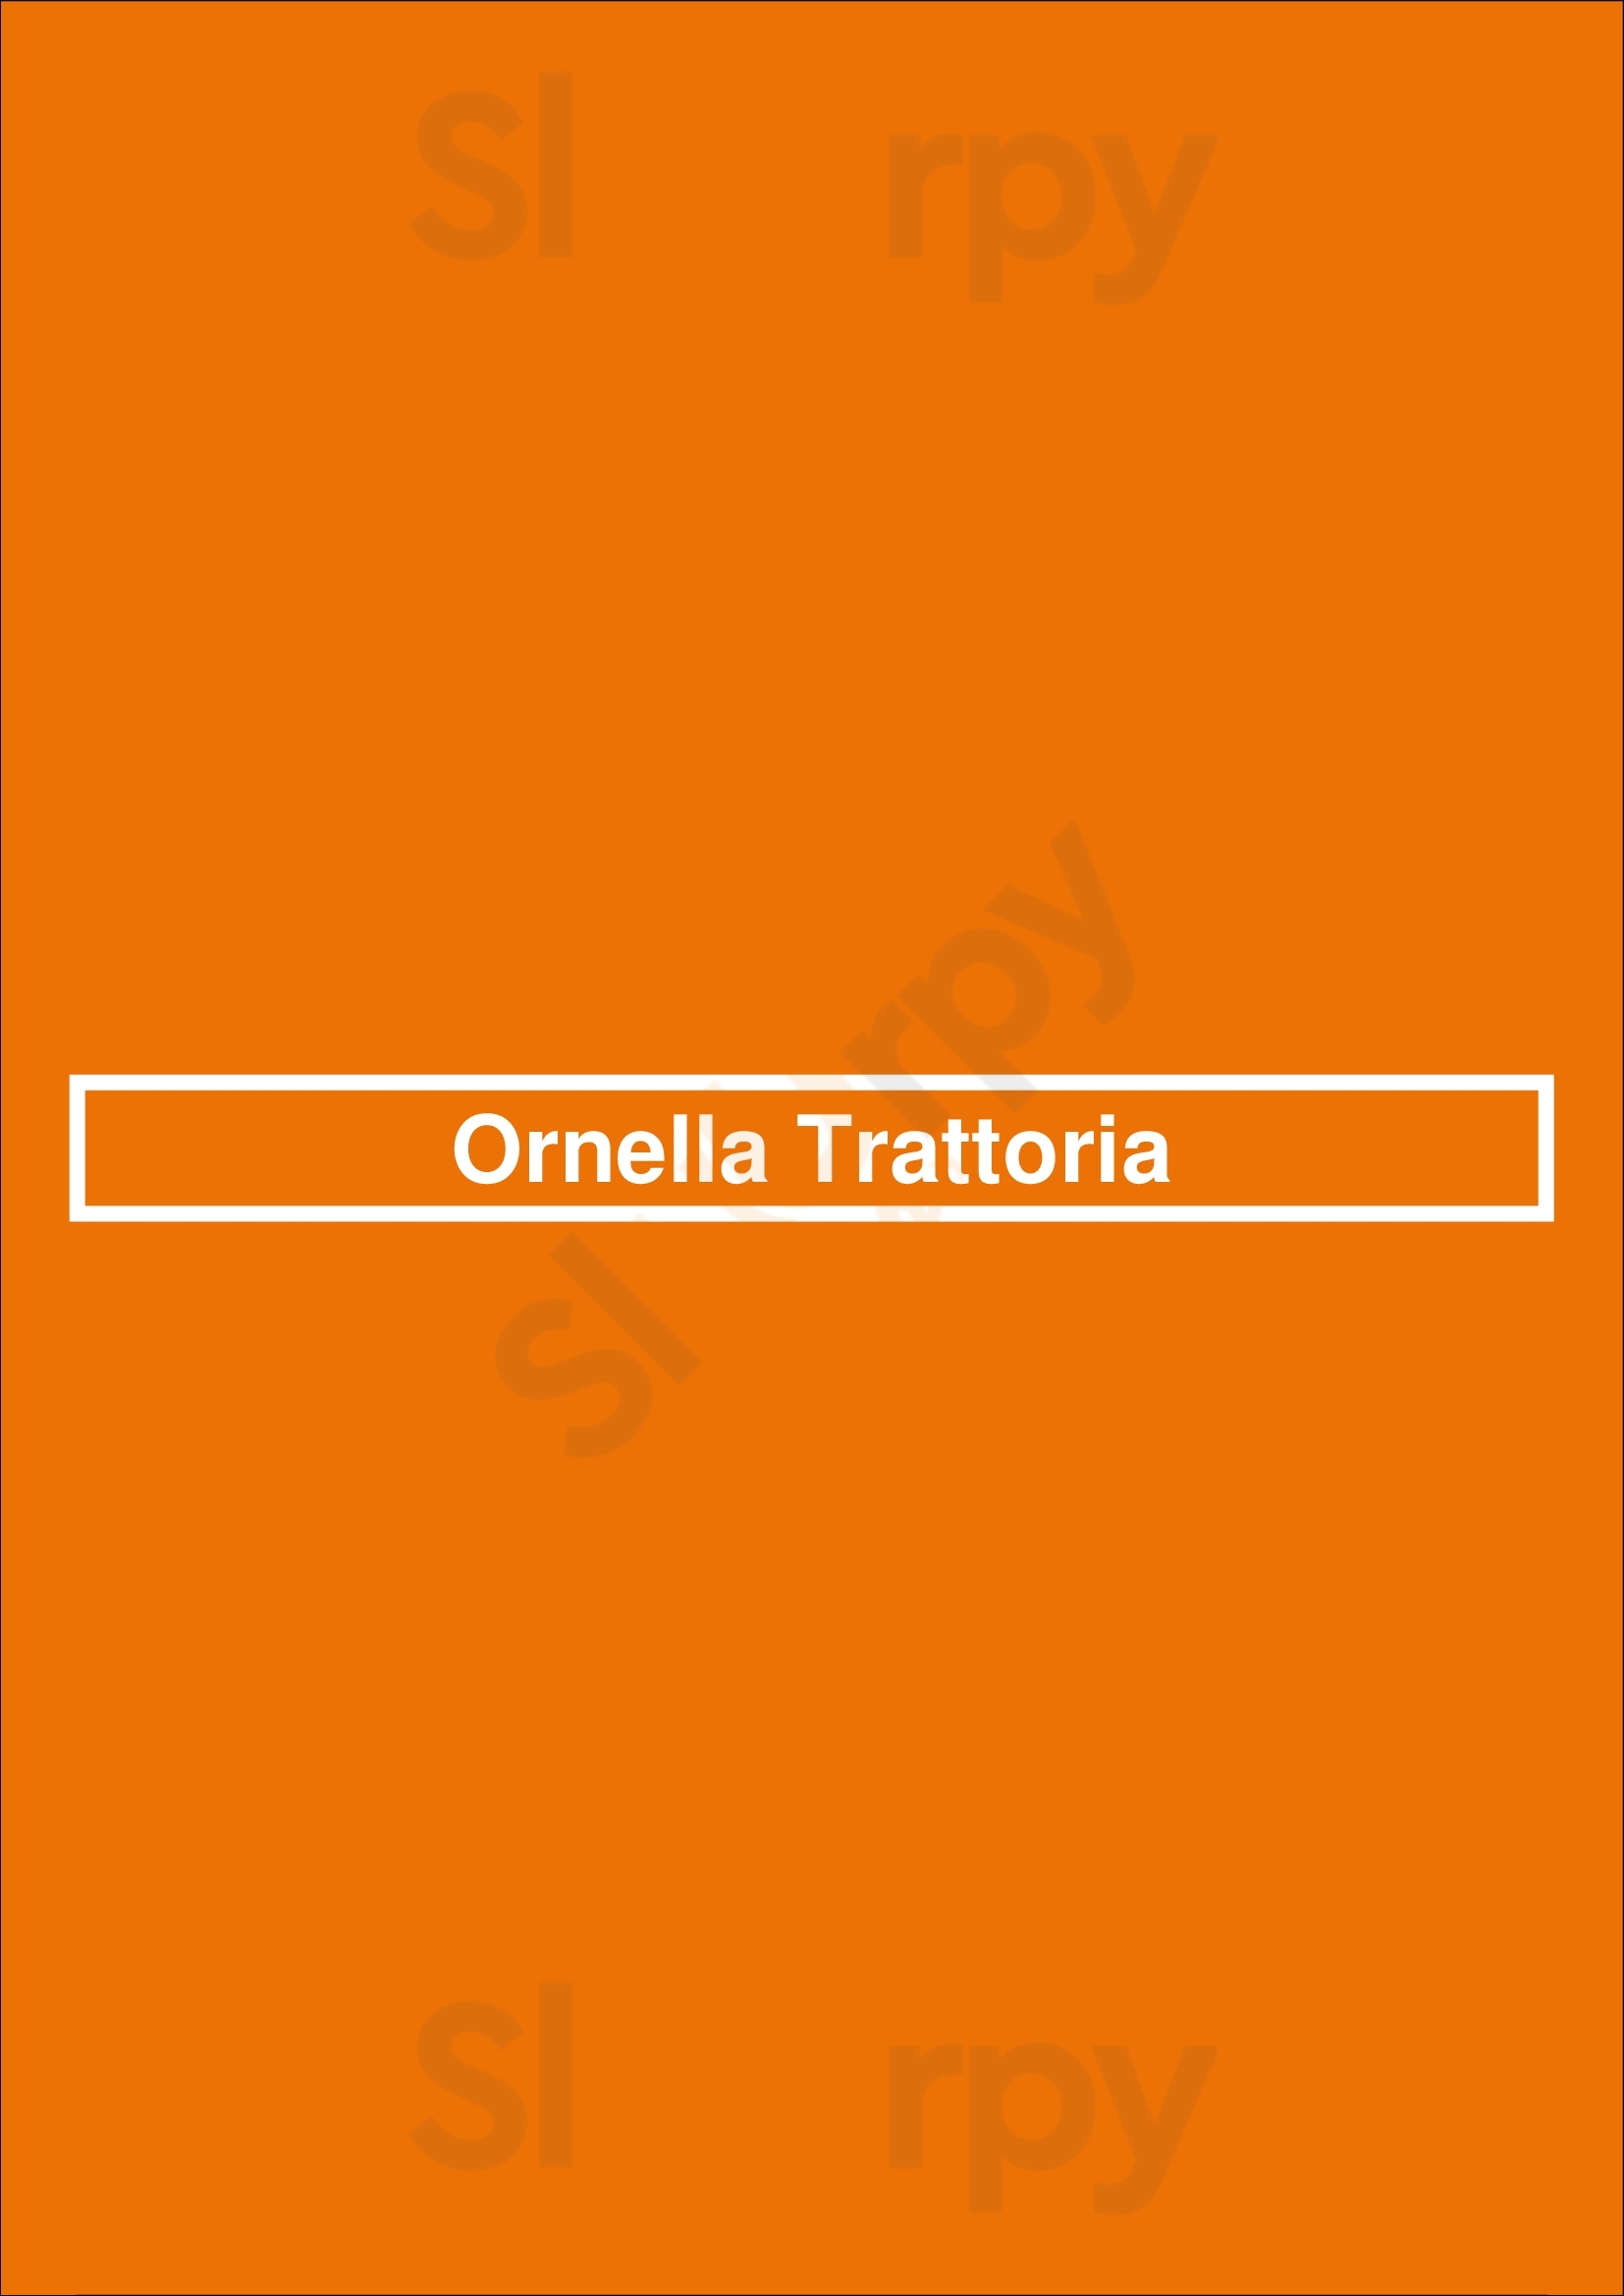 Ornella Trattoria Astoria Menu - 1